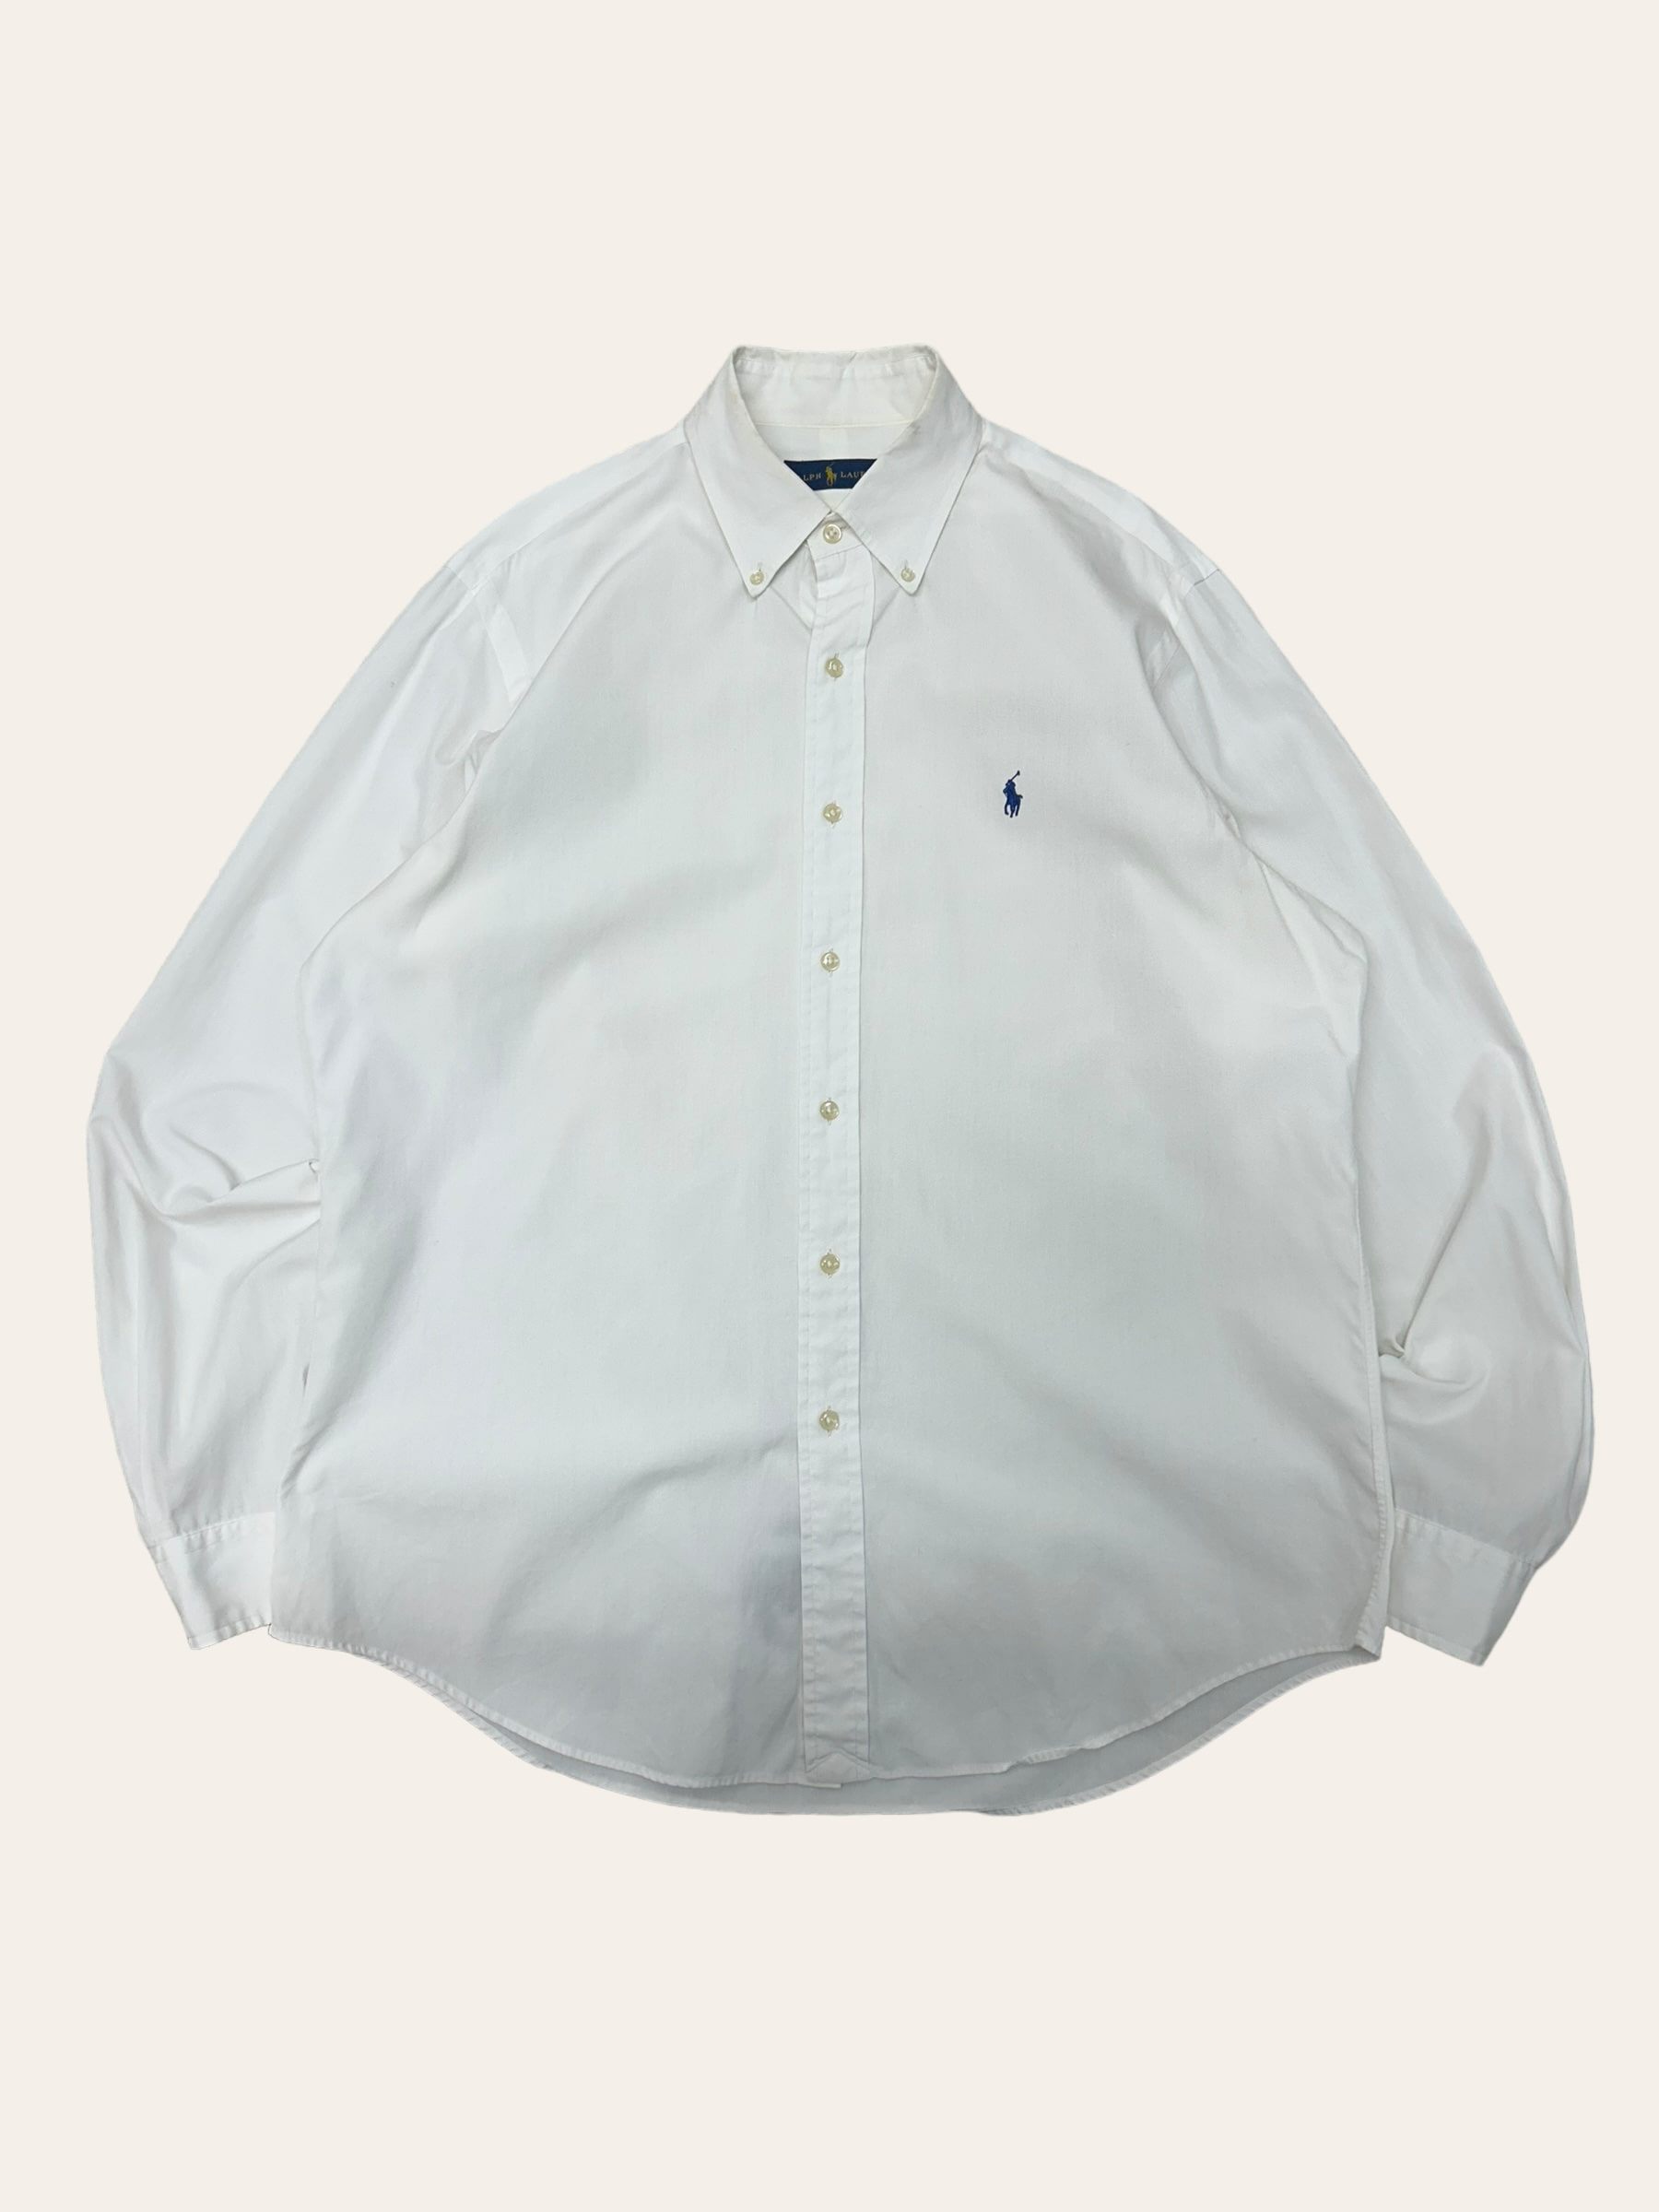 Polo ralph lauren white poplin shirt L